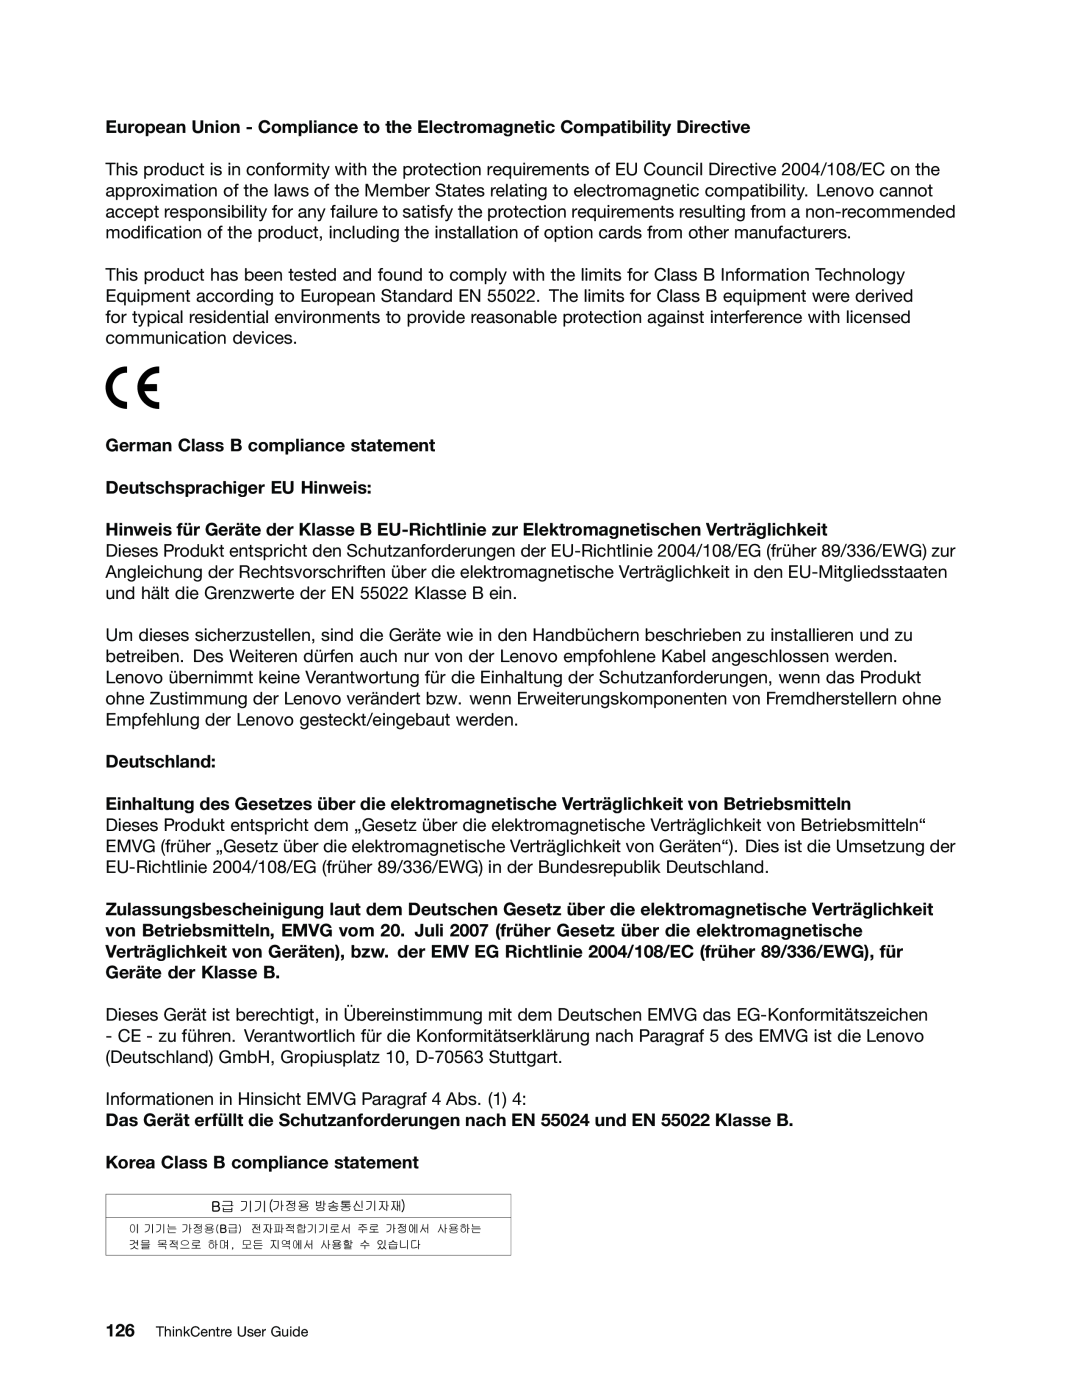 Lenovo 1766, 2112, 2111, 2110, 2011, 1663, 1565 German Class B compliance statement, Deutschsprachiger EU Hinweis, Deutschland 